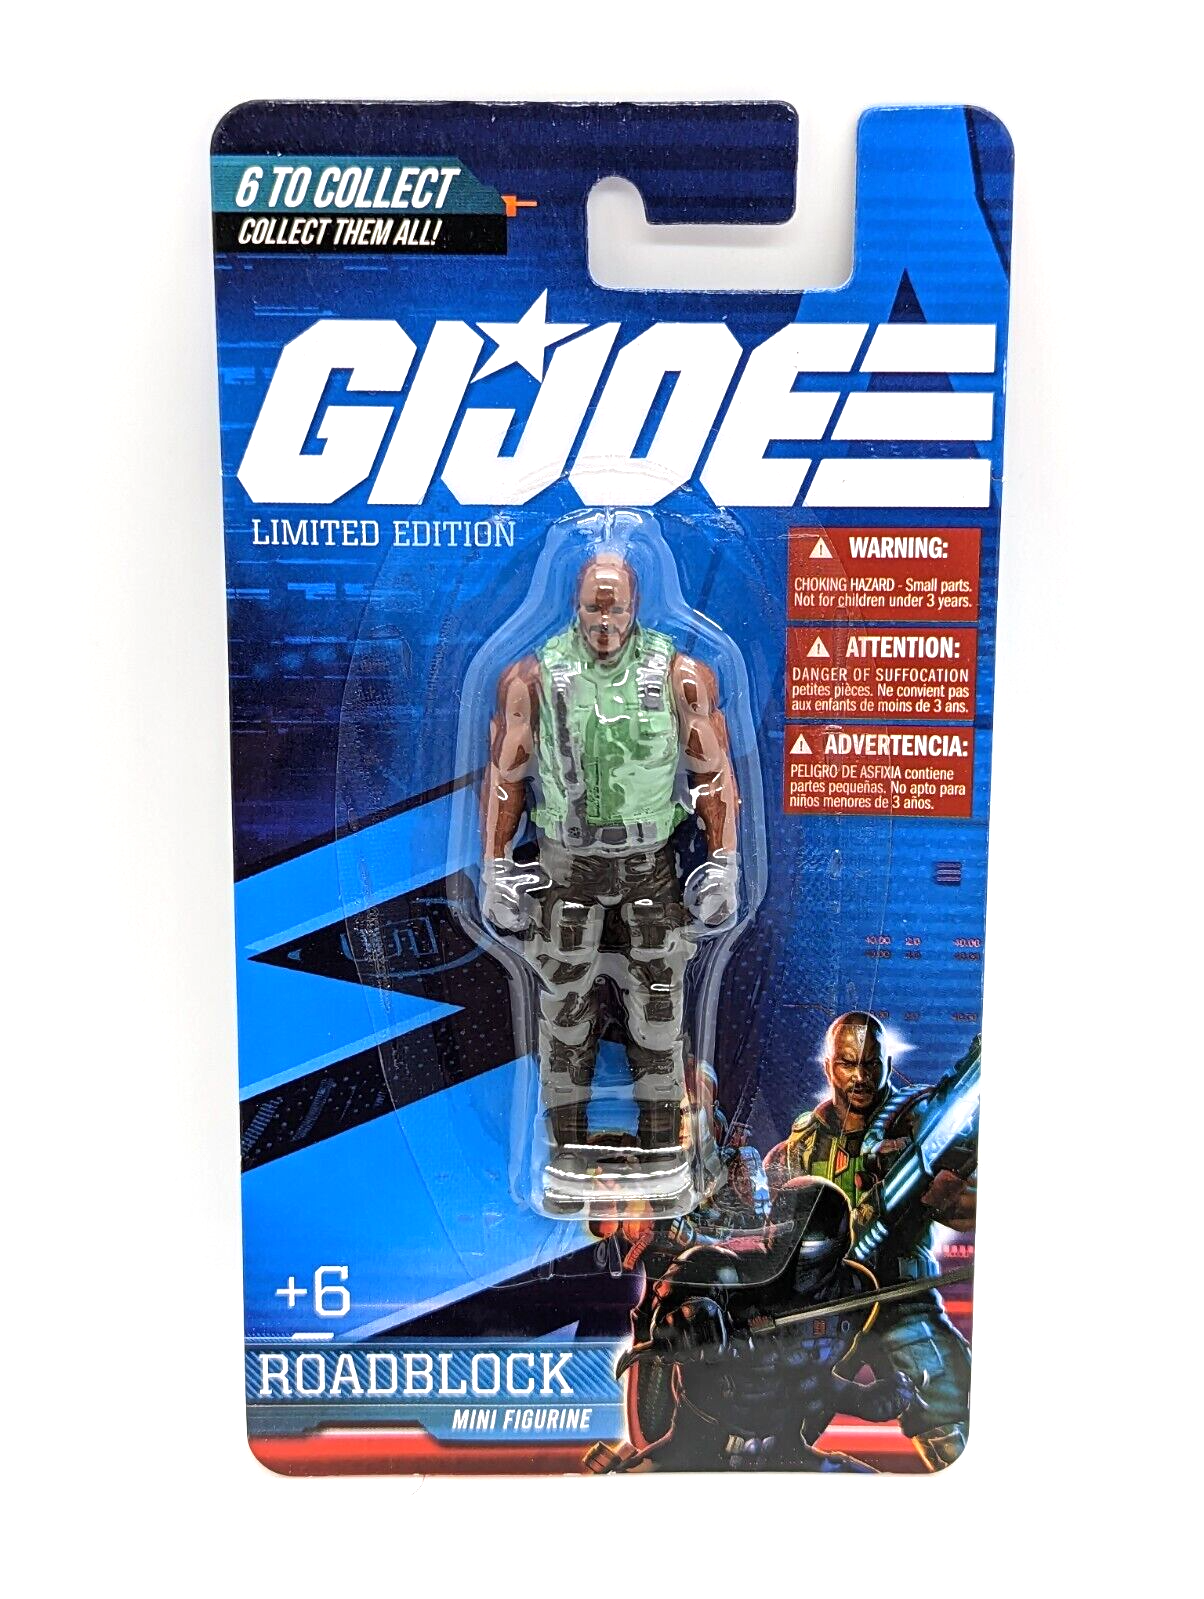 G.I. Joe Limited Edition Hasbro Mini Figures (Styles Vary)